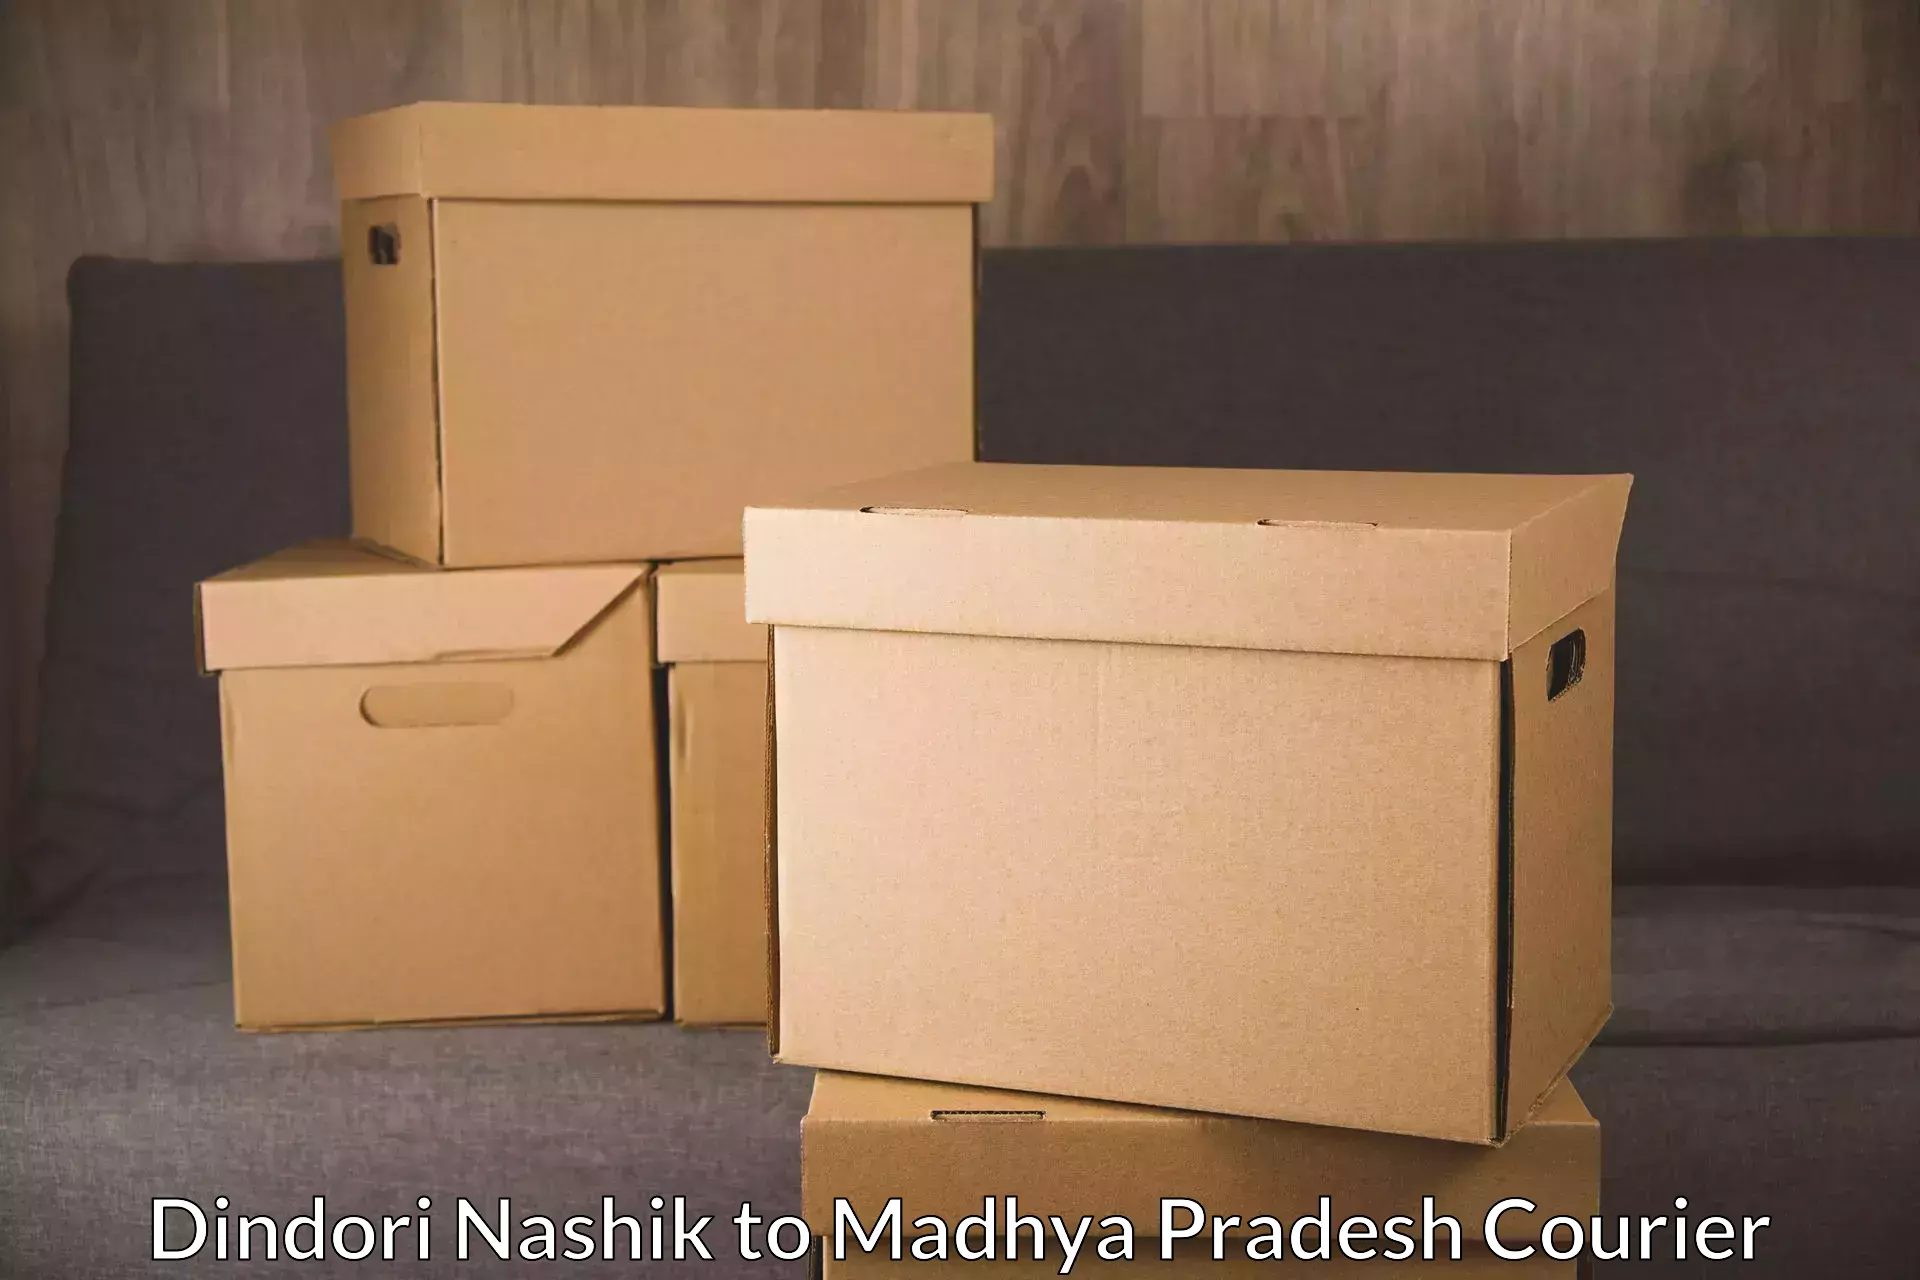 Courier service comparison Dindori Nashik to Ujjain